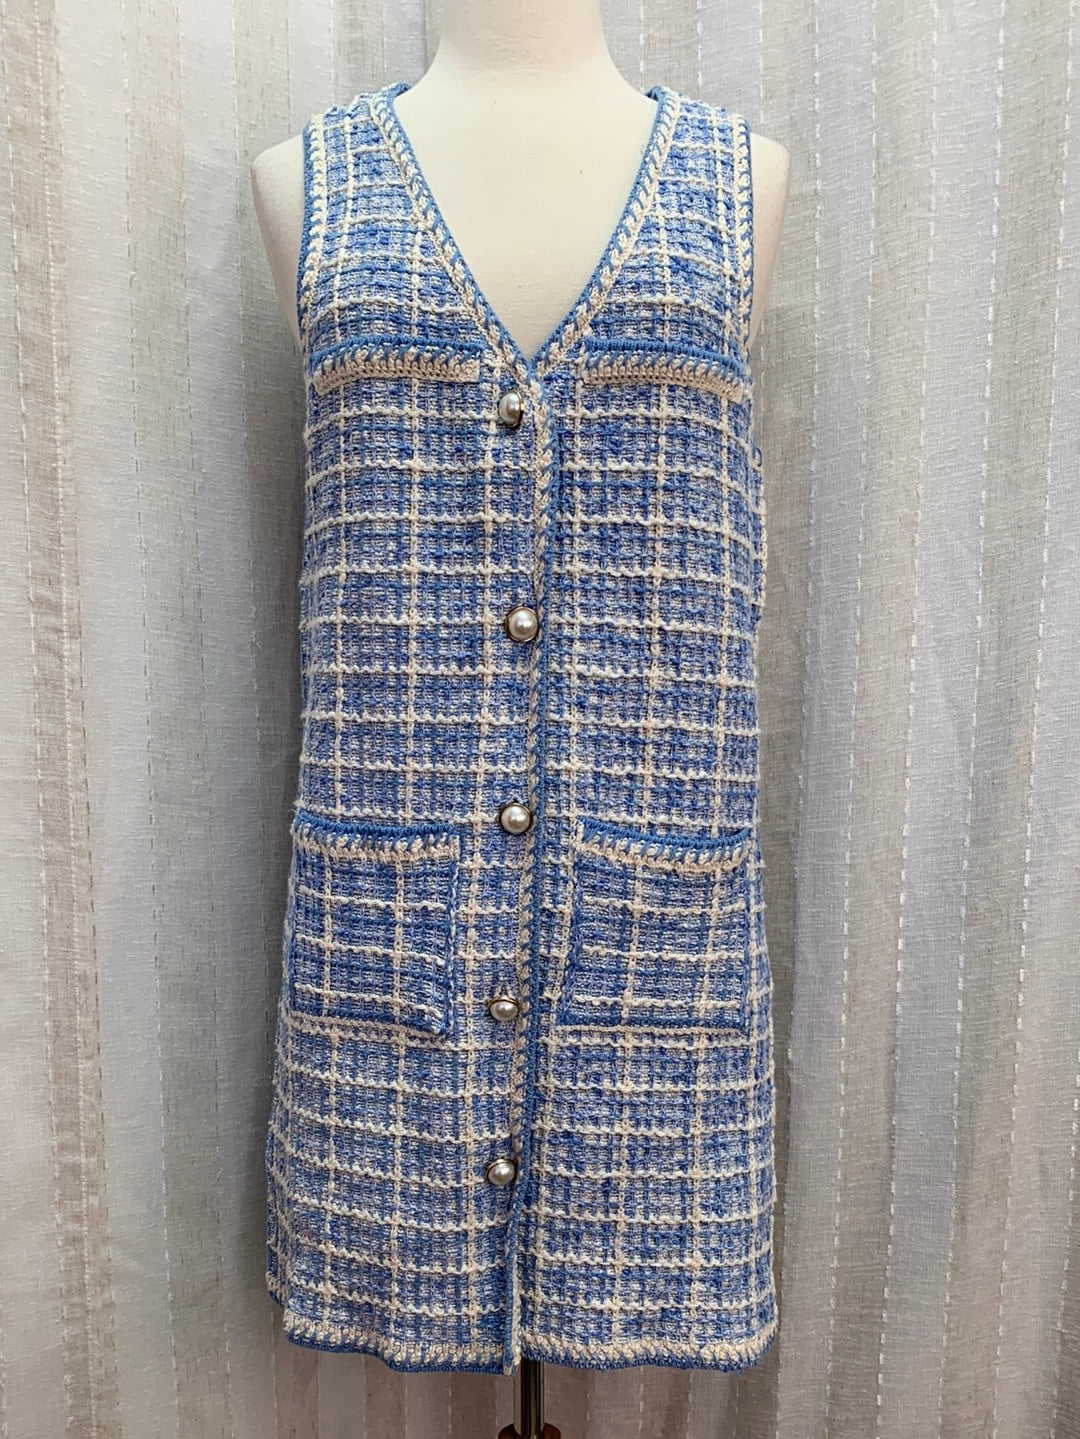 NWT - MANGO blue cream Sleeveless Button Front Tweed Pocket Dress - Small